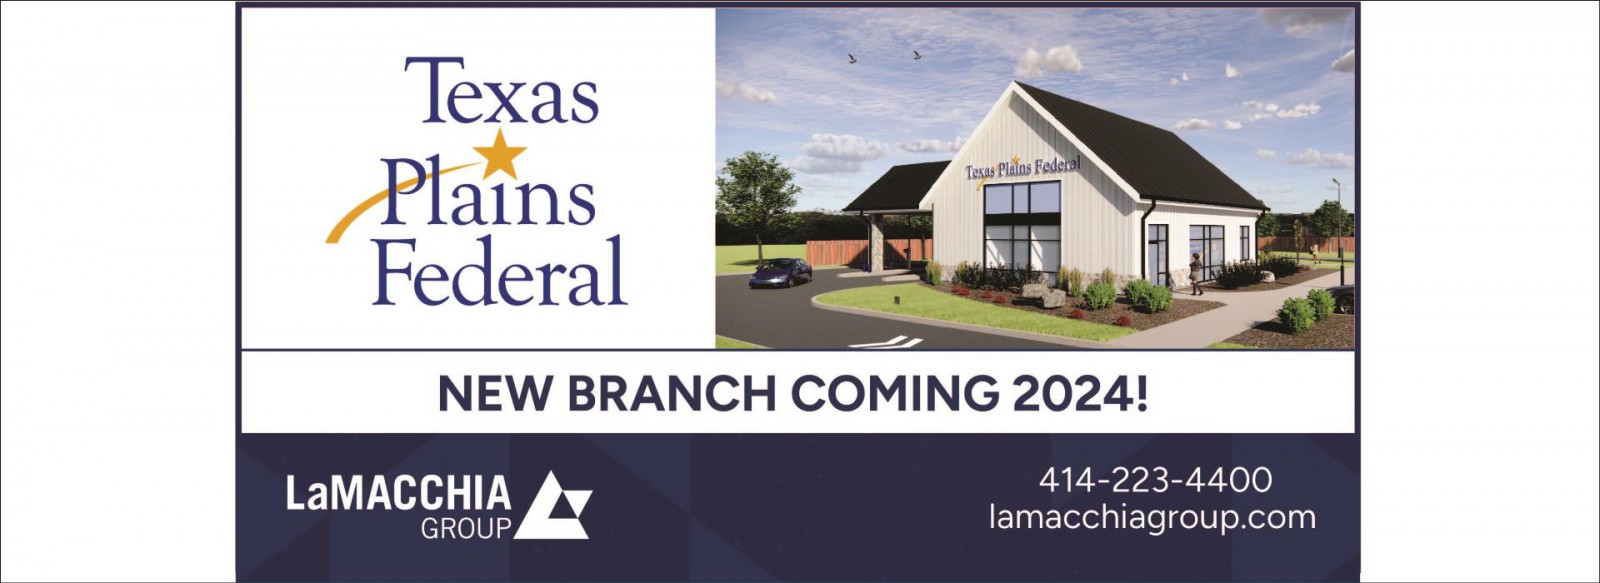 Texas Plains Federal - New Branch Coming 2024! LaMACCHIA Group